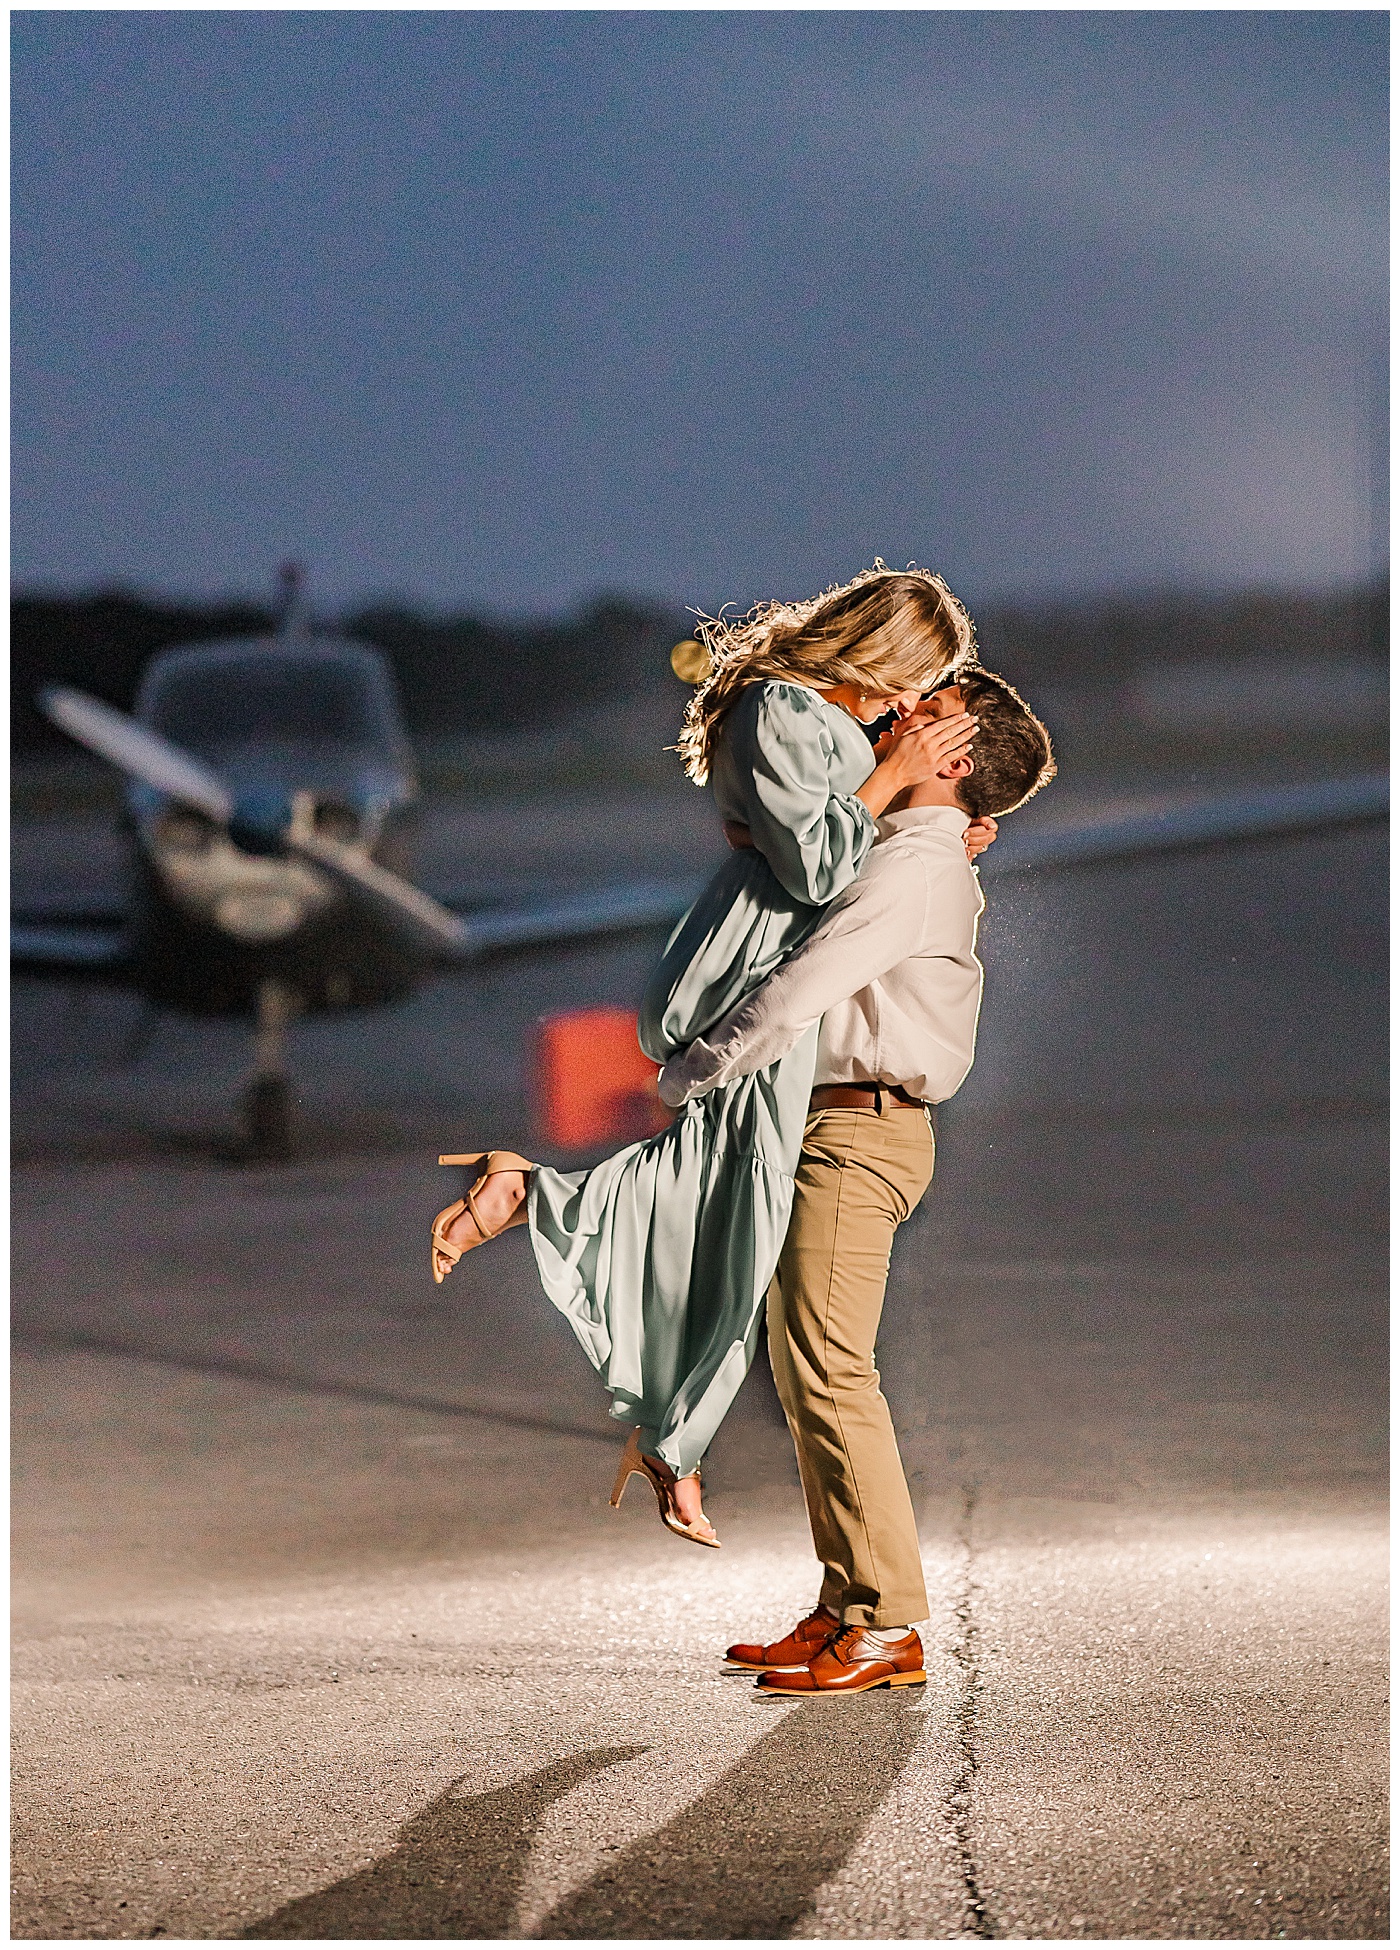 Pilot Engagement Hugging Couple